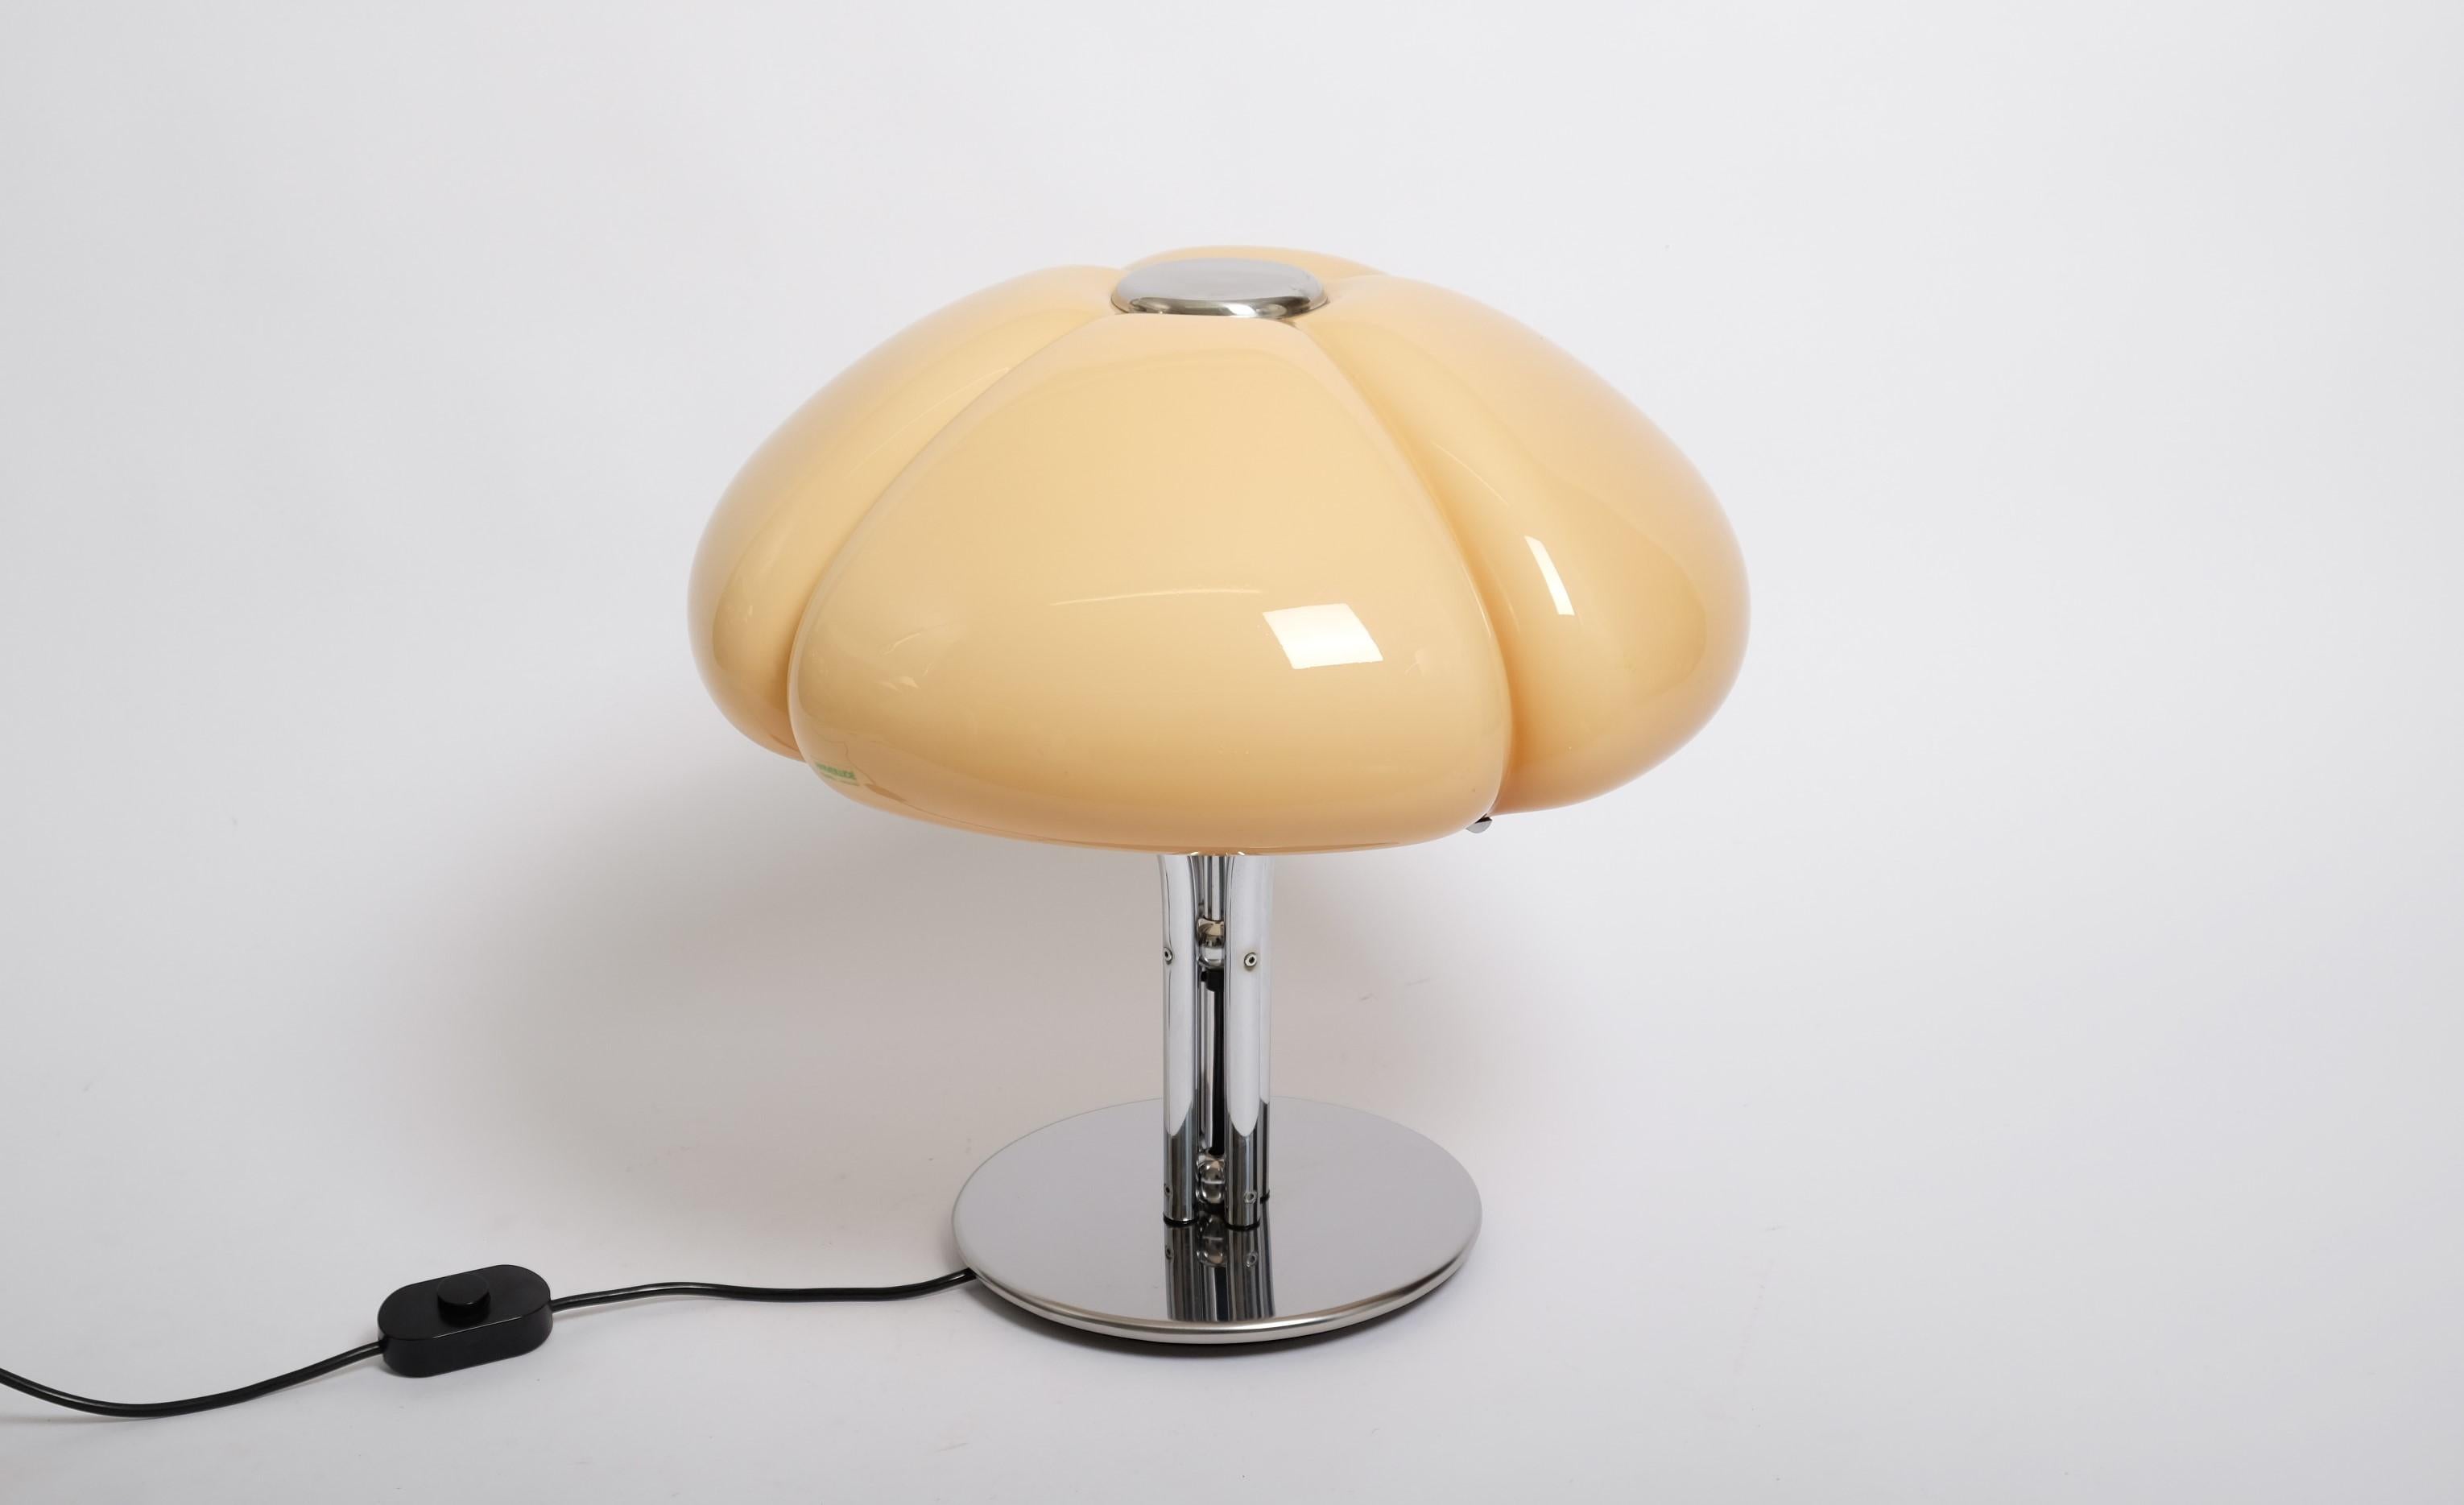 Mid-20th Century Quadrifoglio Table Lamp by Gae Aulenti for Guzzini, Italy 1960s